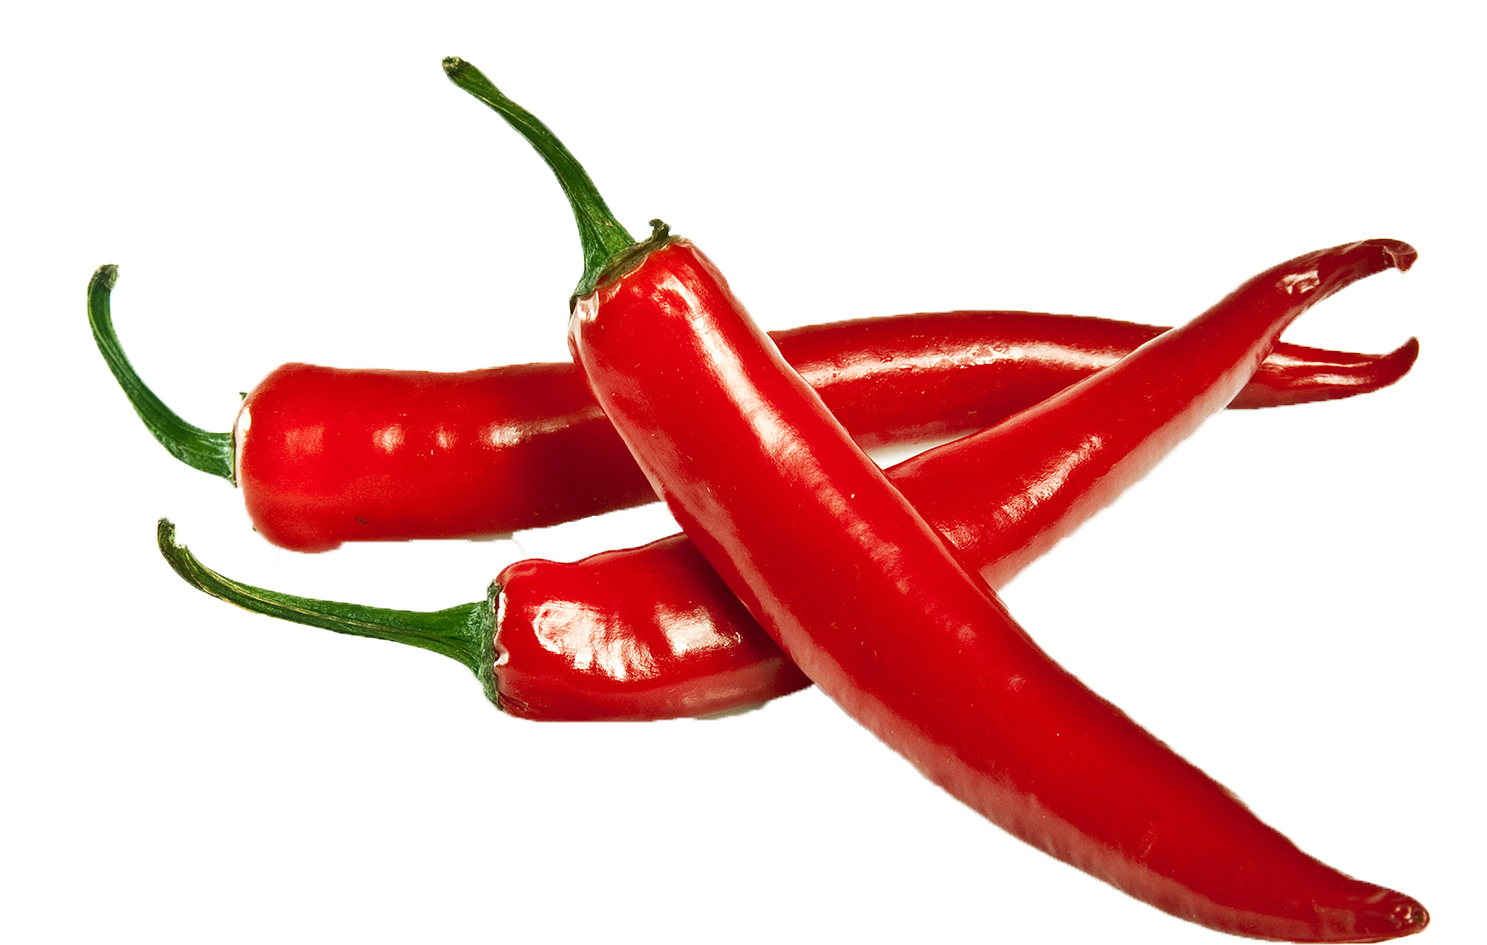 Chutney Chili Pepper Indian Cuisine Chili Powder Spice - Red Chillies (1486x1023)